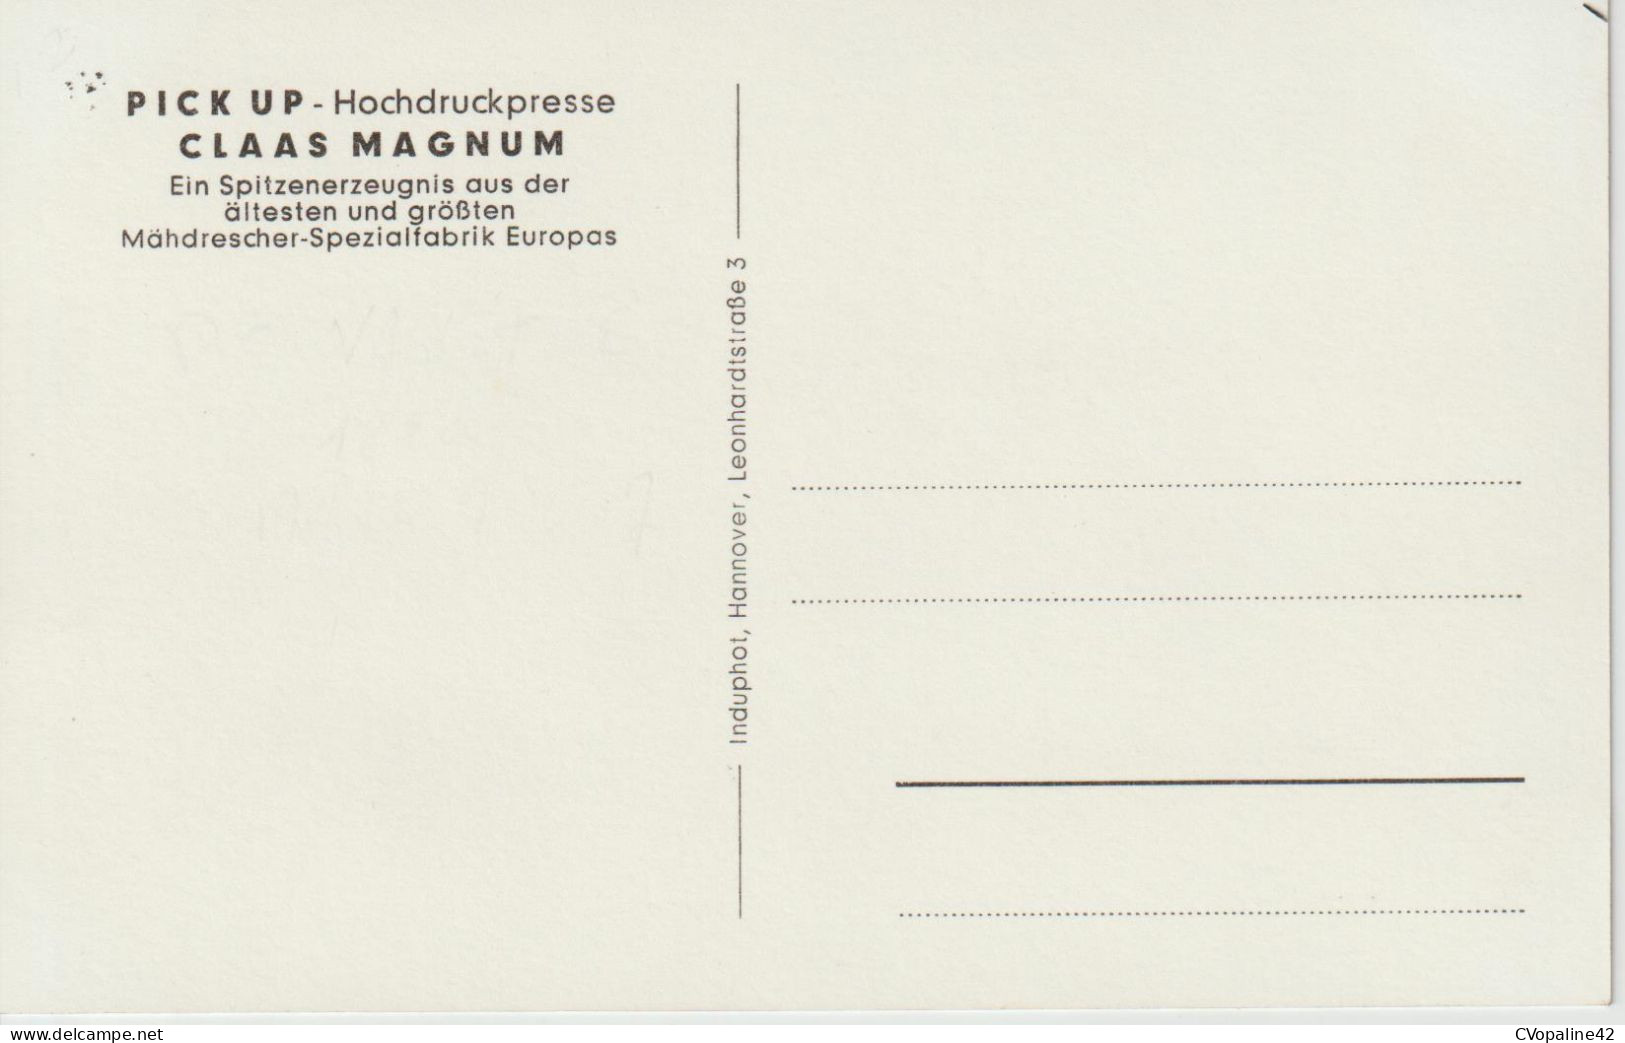 CLAAS MAGNUM - PICK UP - Hochdruckpresse - Publicidad